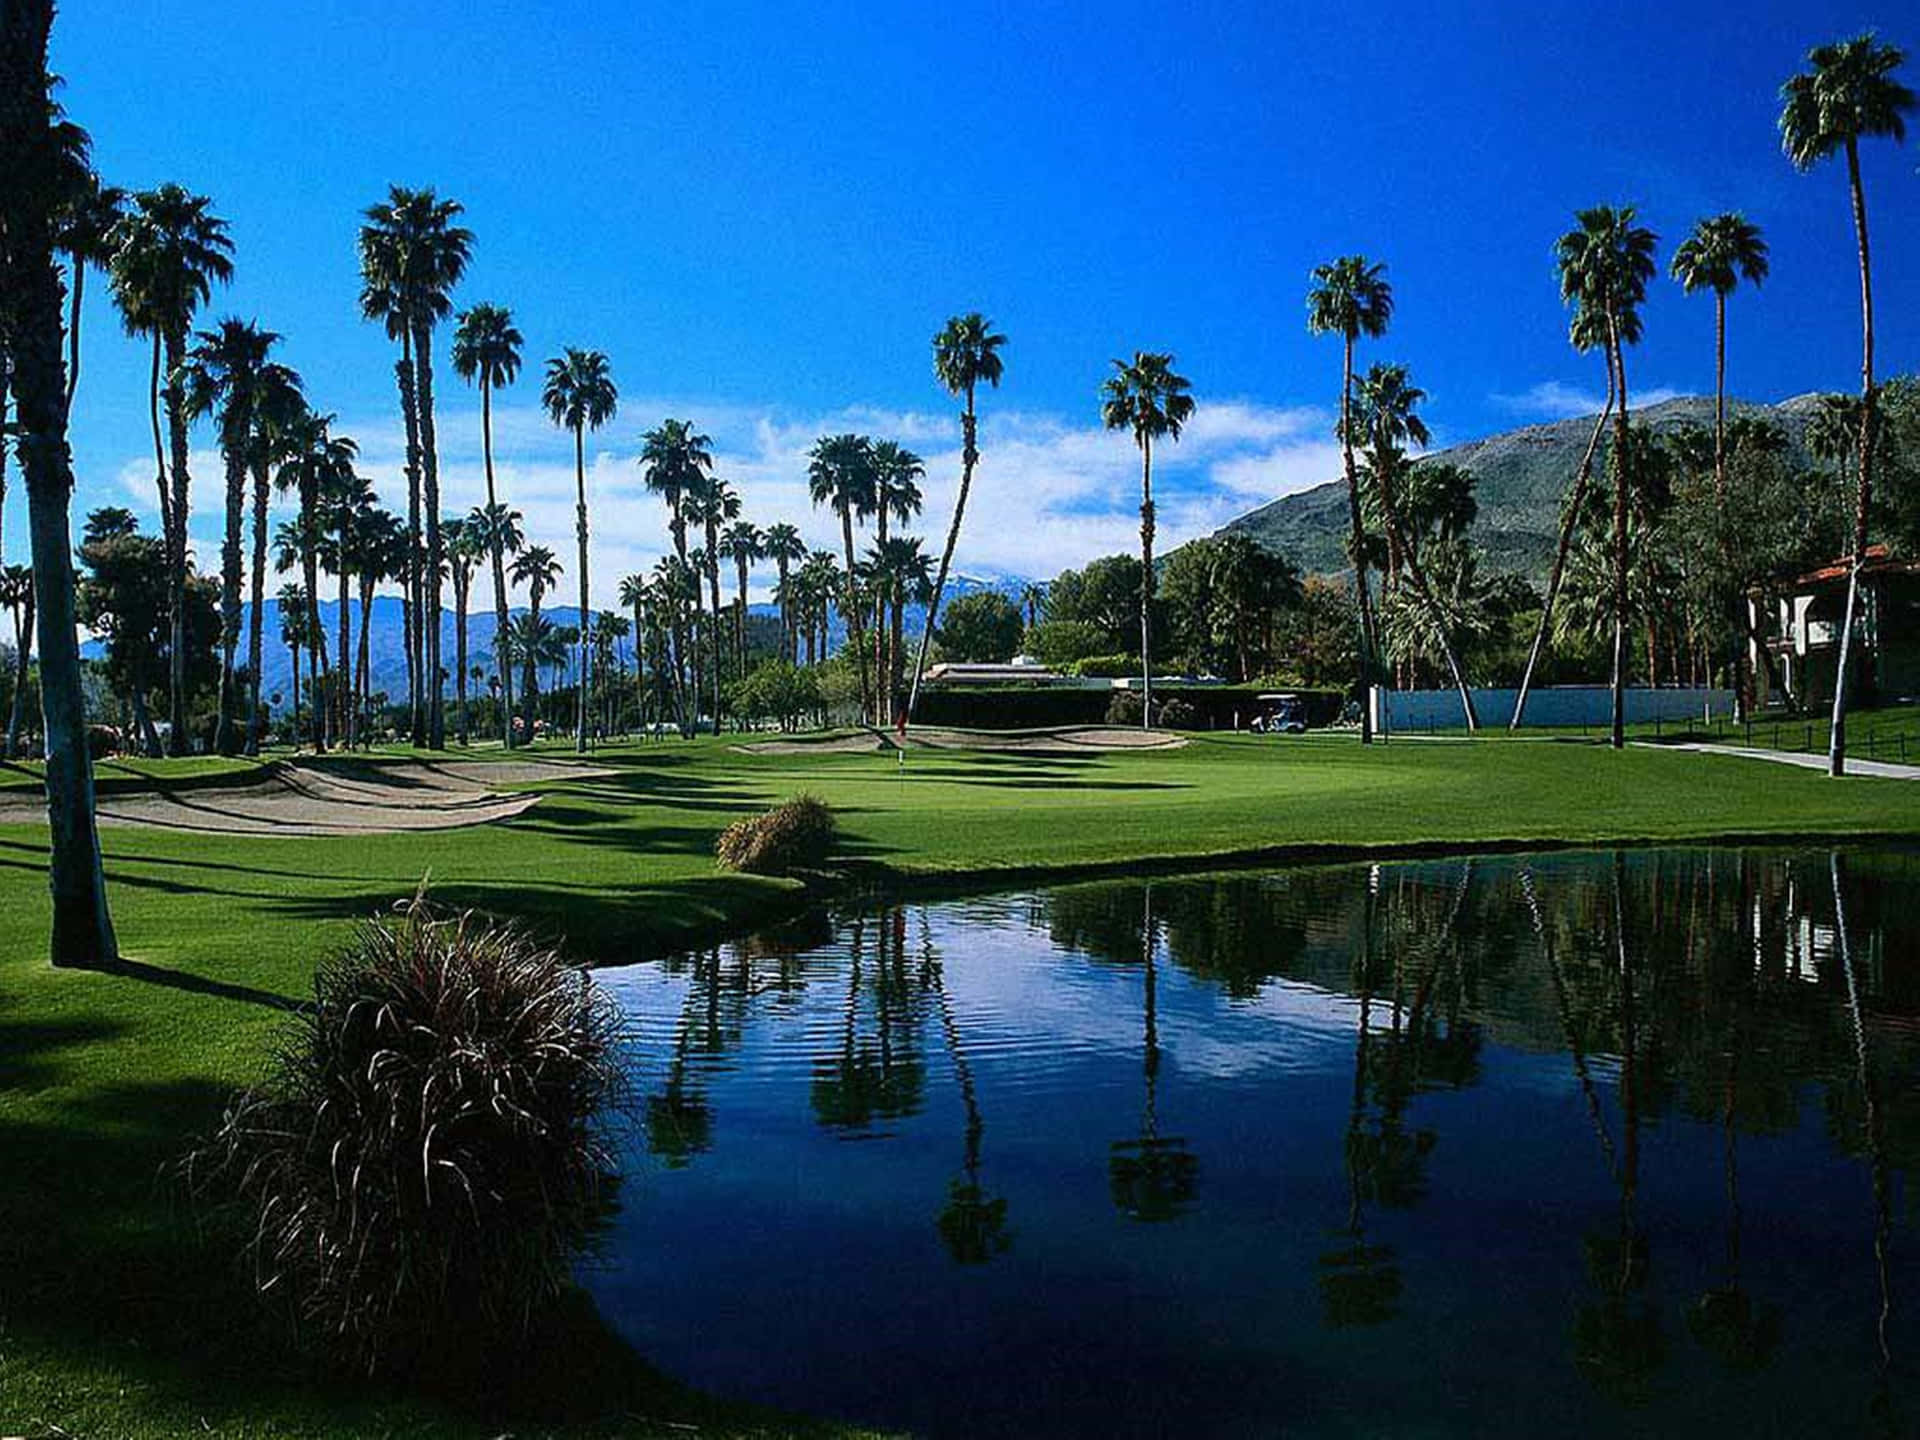 Stunning 4K Golf Course Scenery